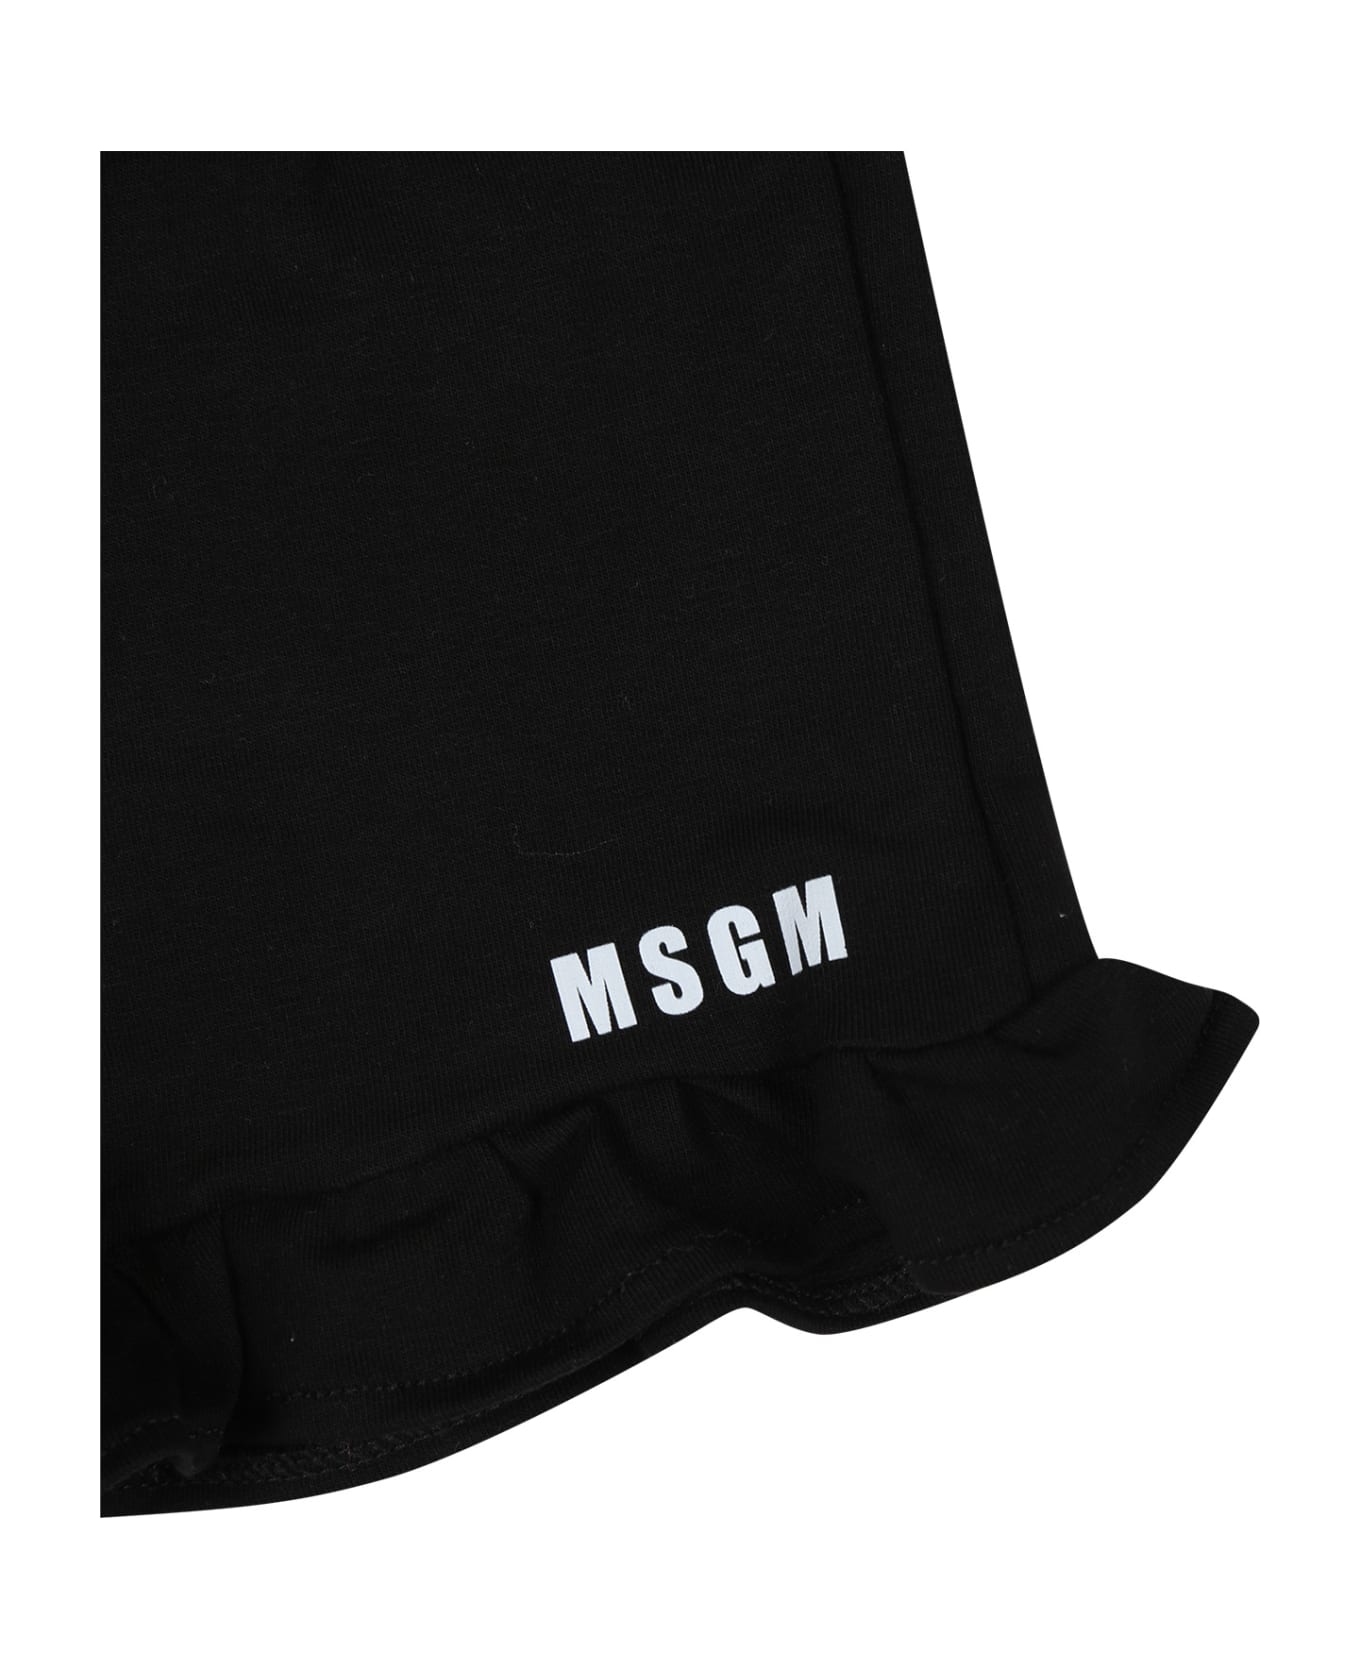 MSGM Black Set For Baby Girl With Logo - Black